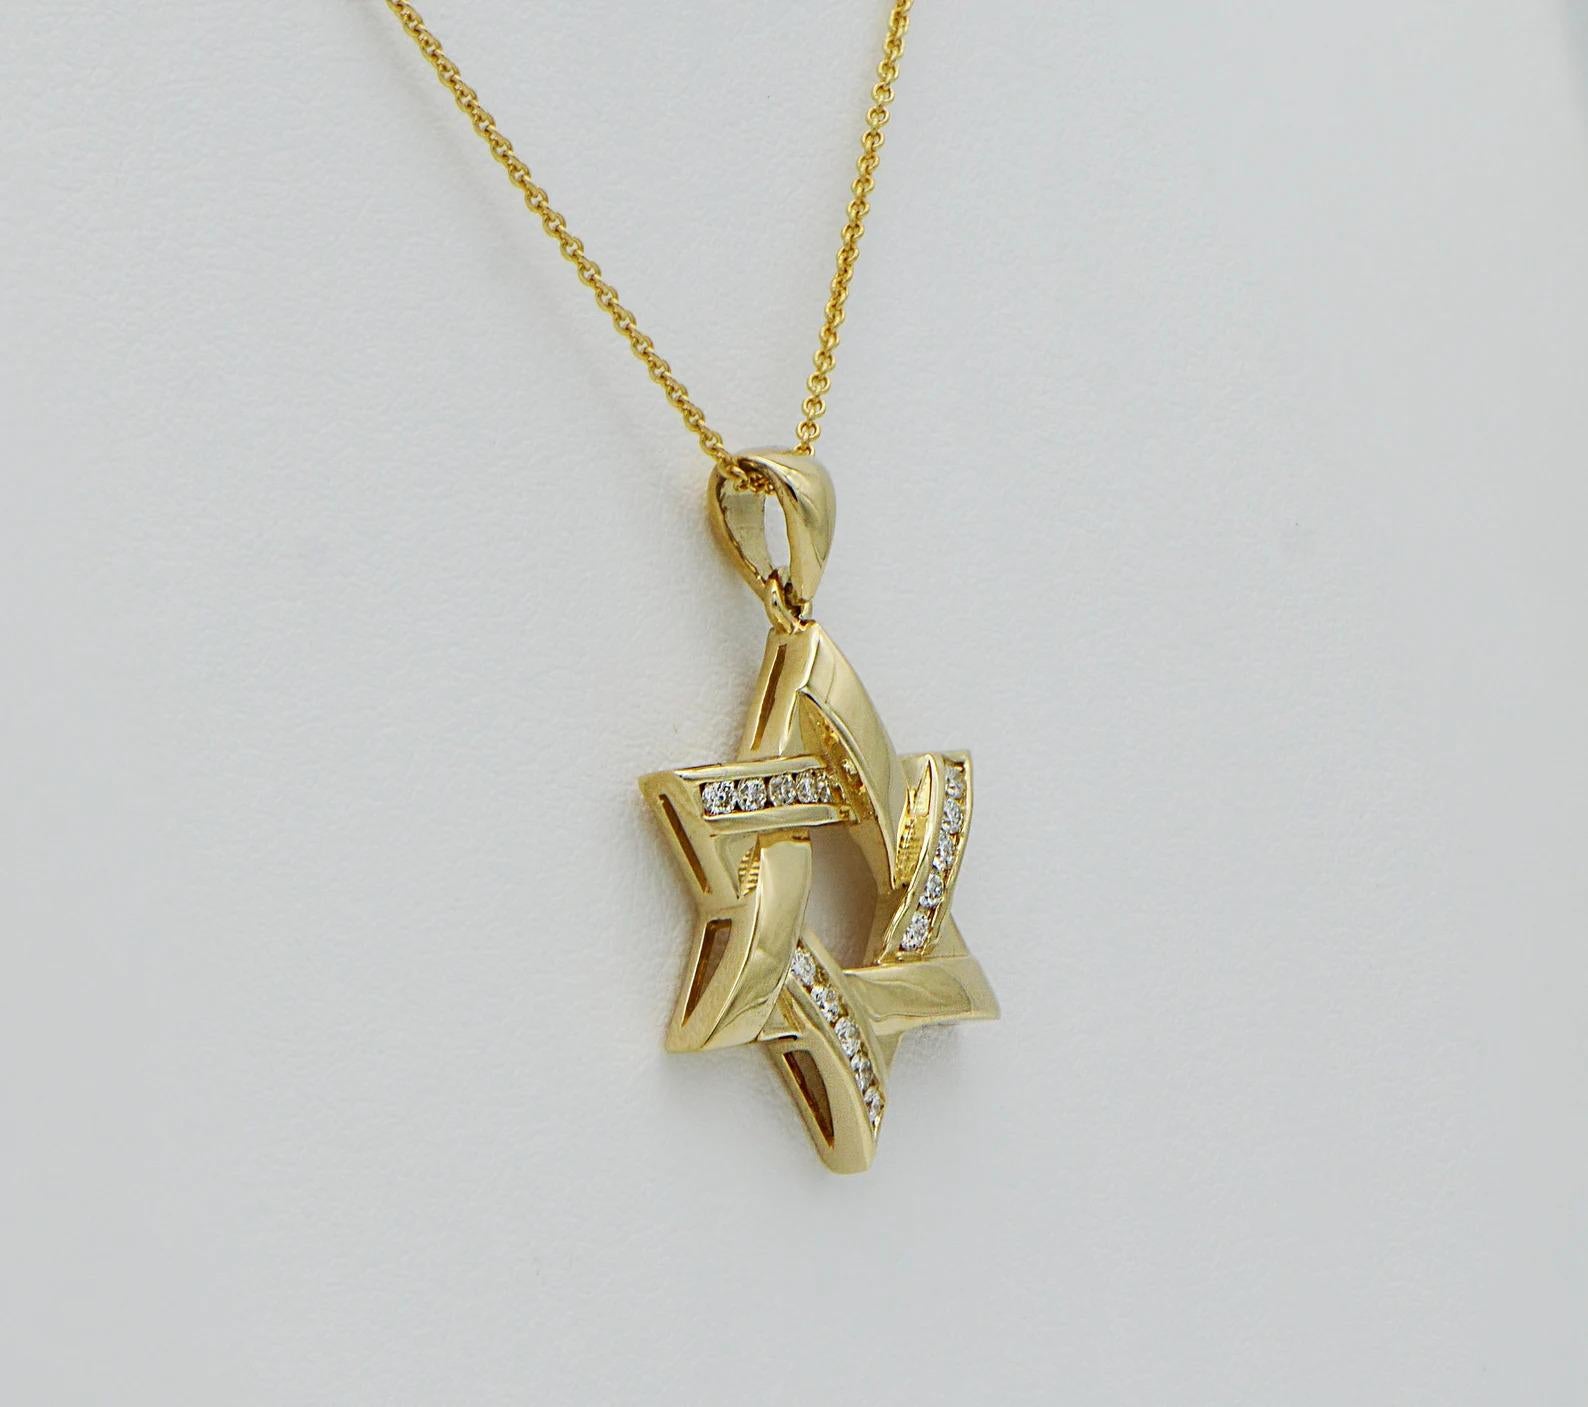 24 karat jewelry star of david